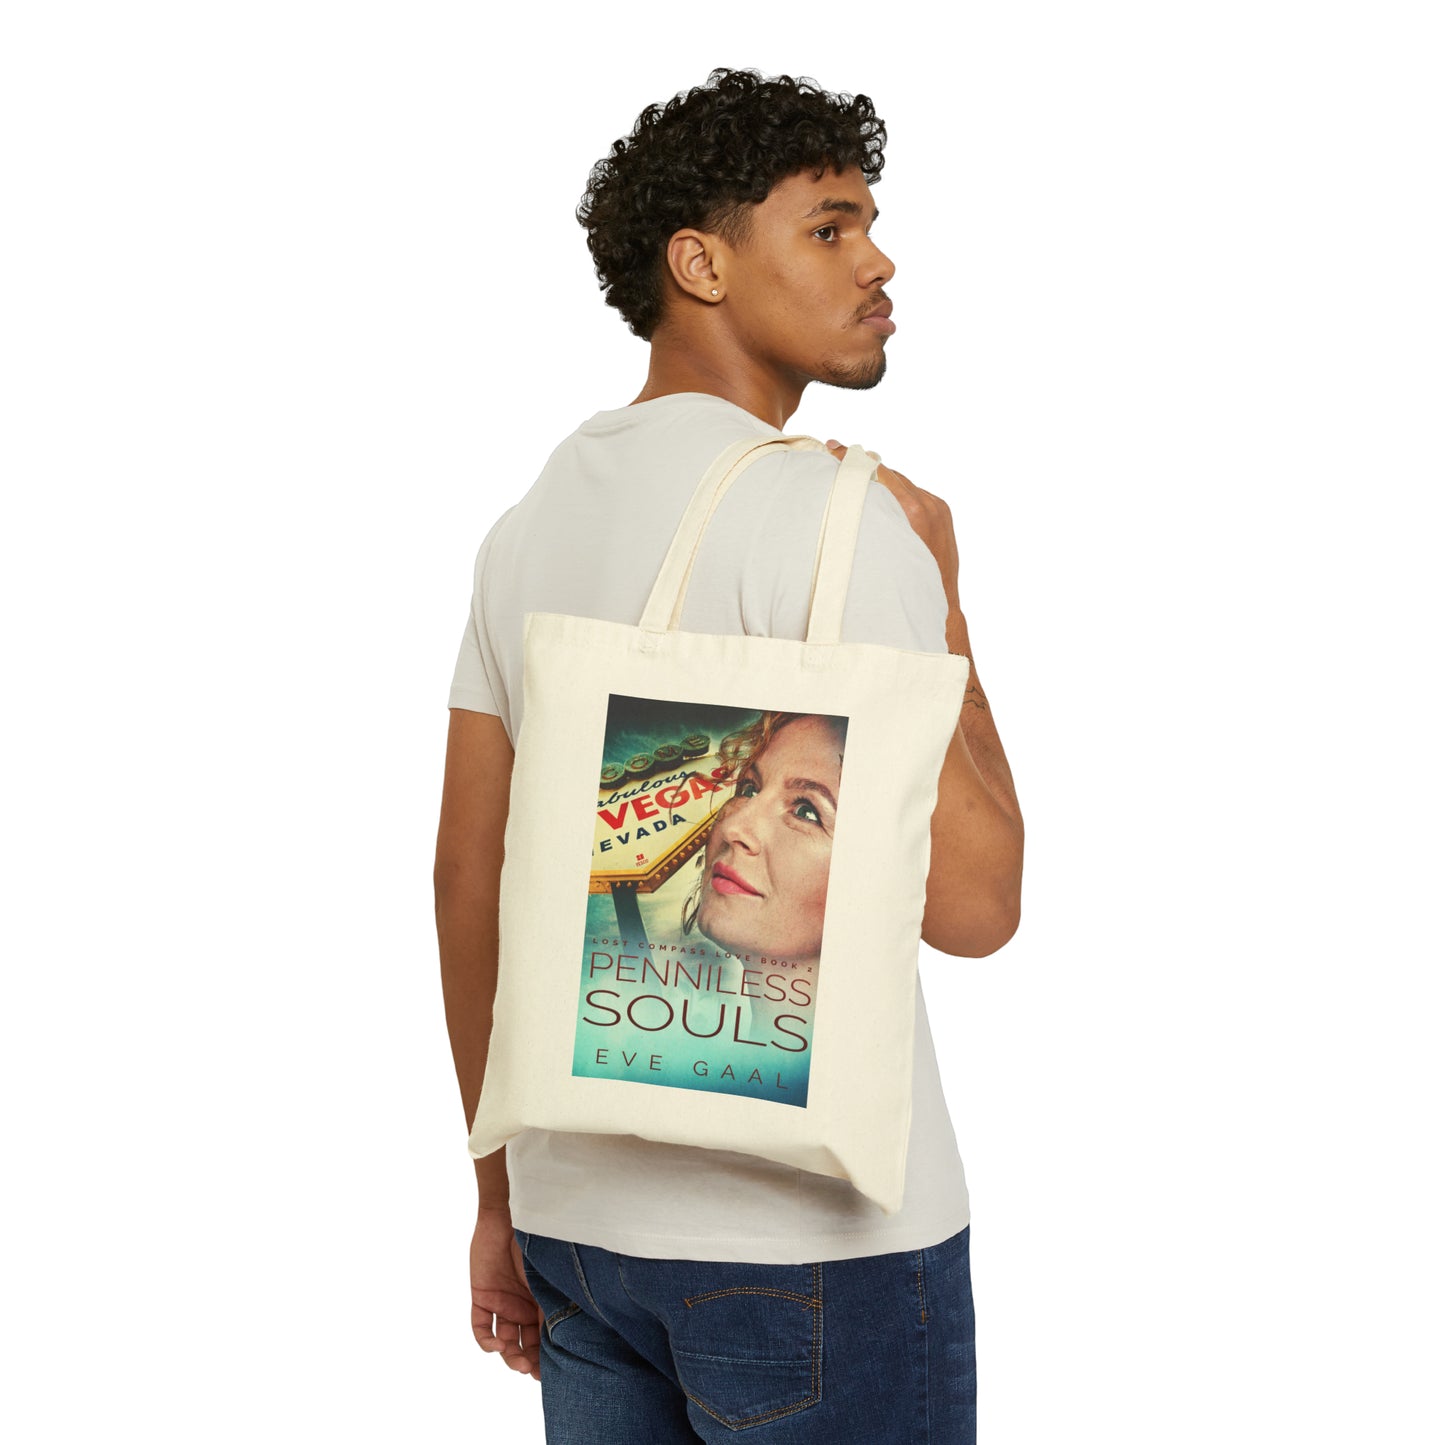 Penniless Souls - Cotton Canvas Tote Bag